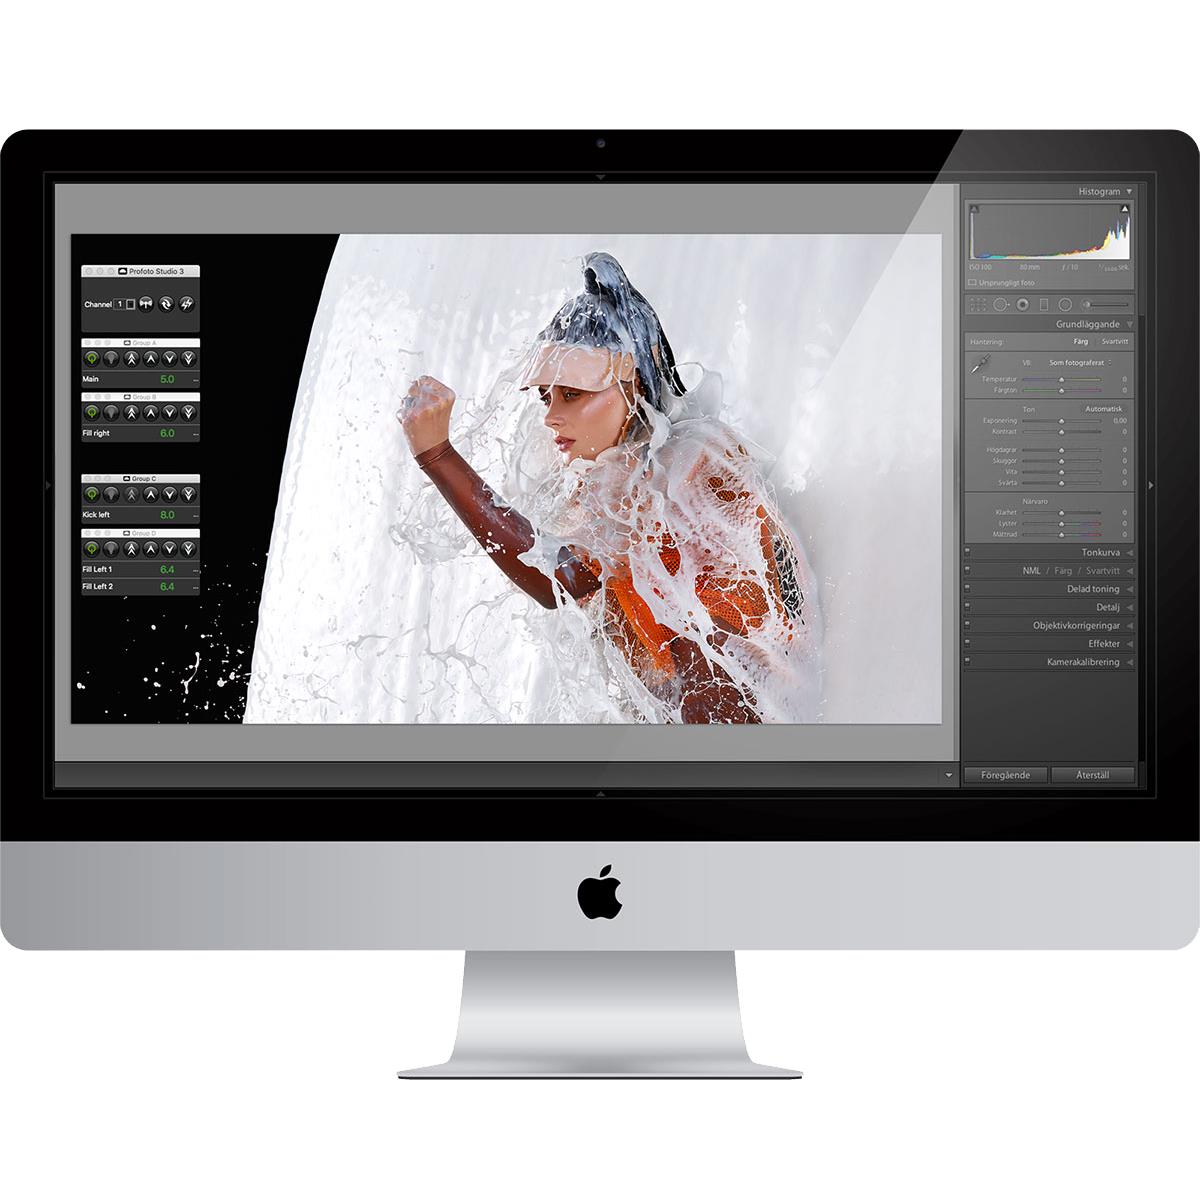 image studio software download